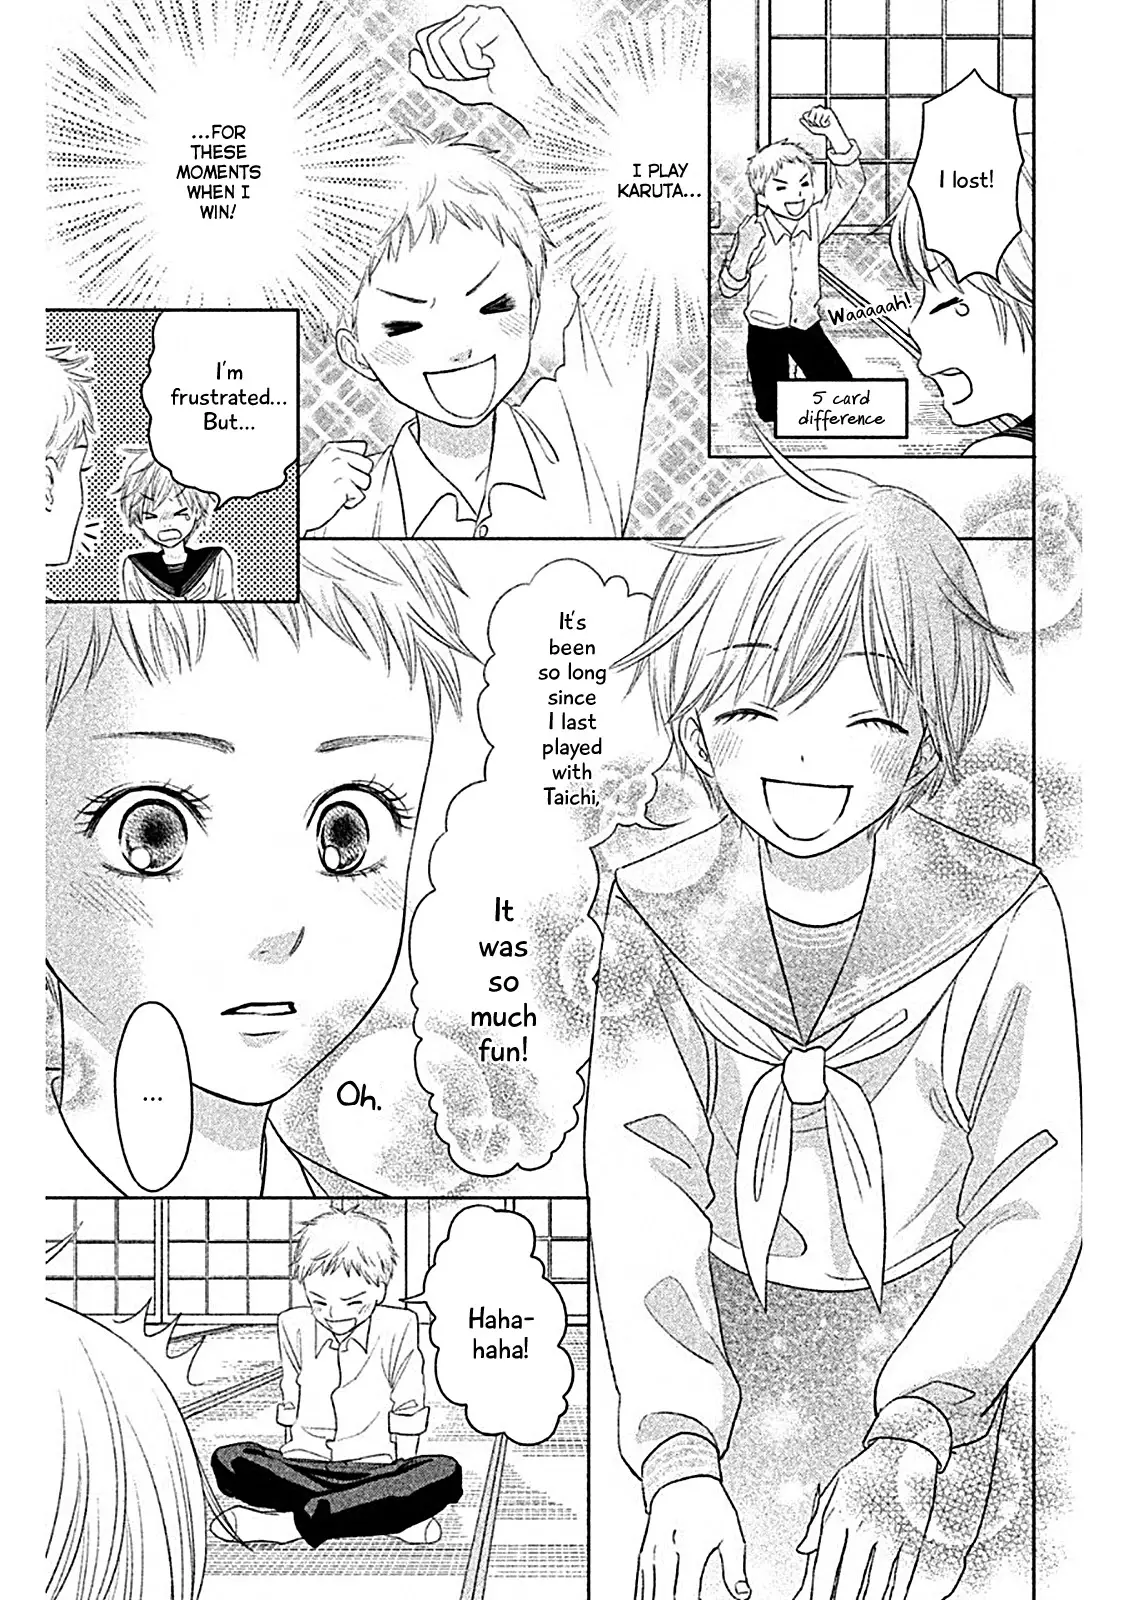 Chihayafuru: Middle School Arc - 3 page 16